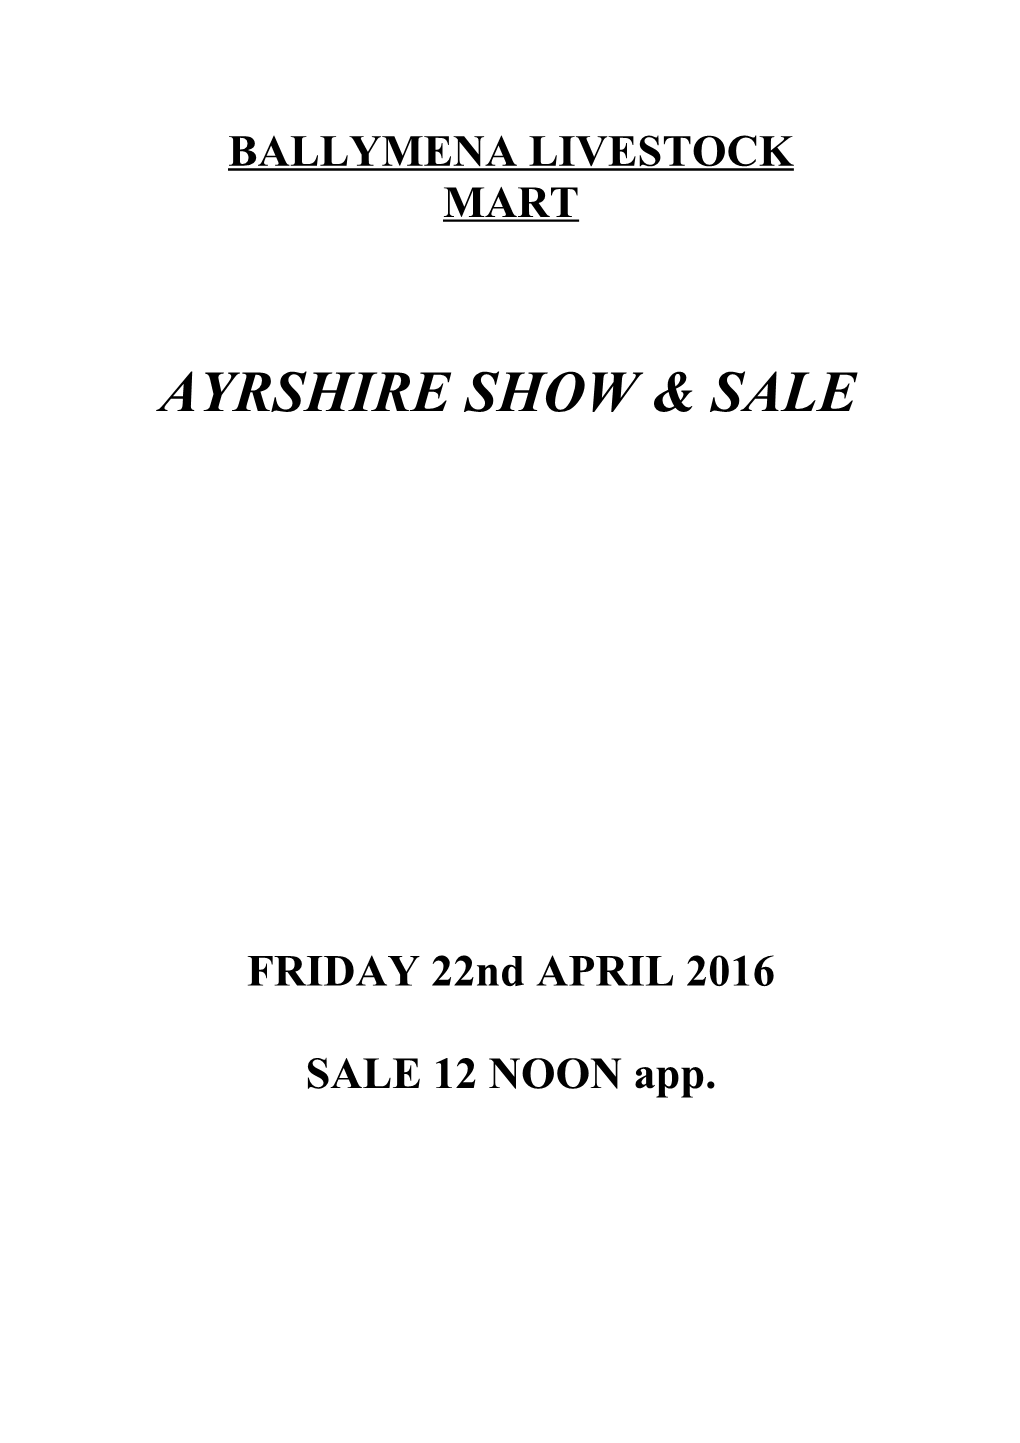 Ayrshire Show & Sale